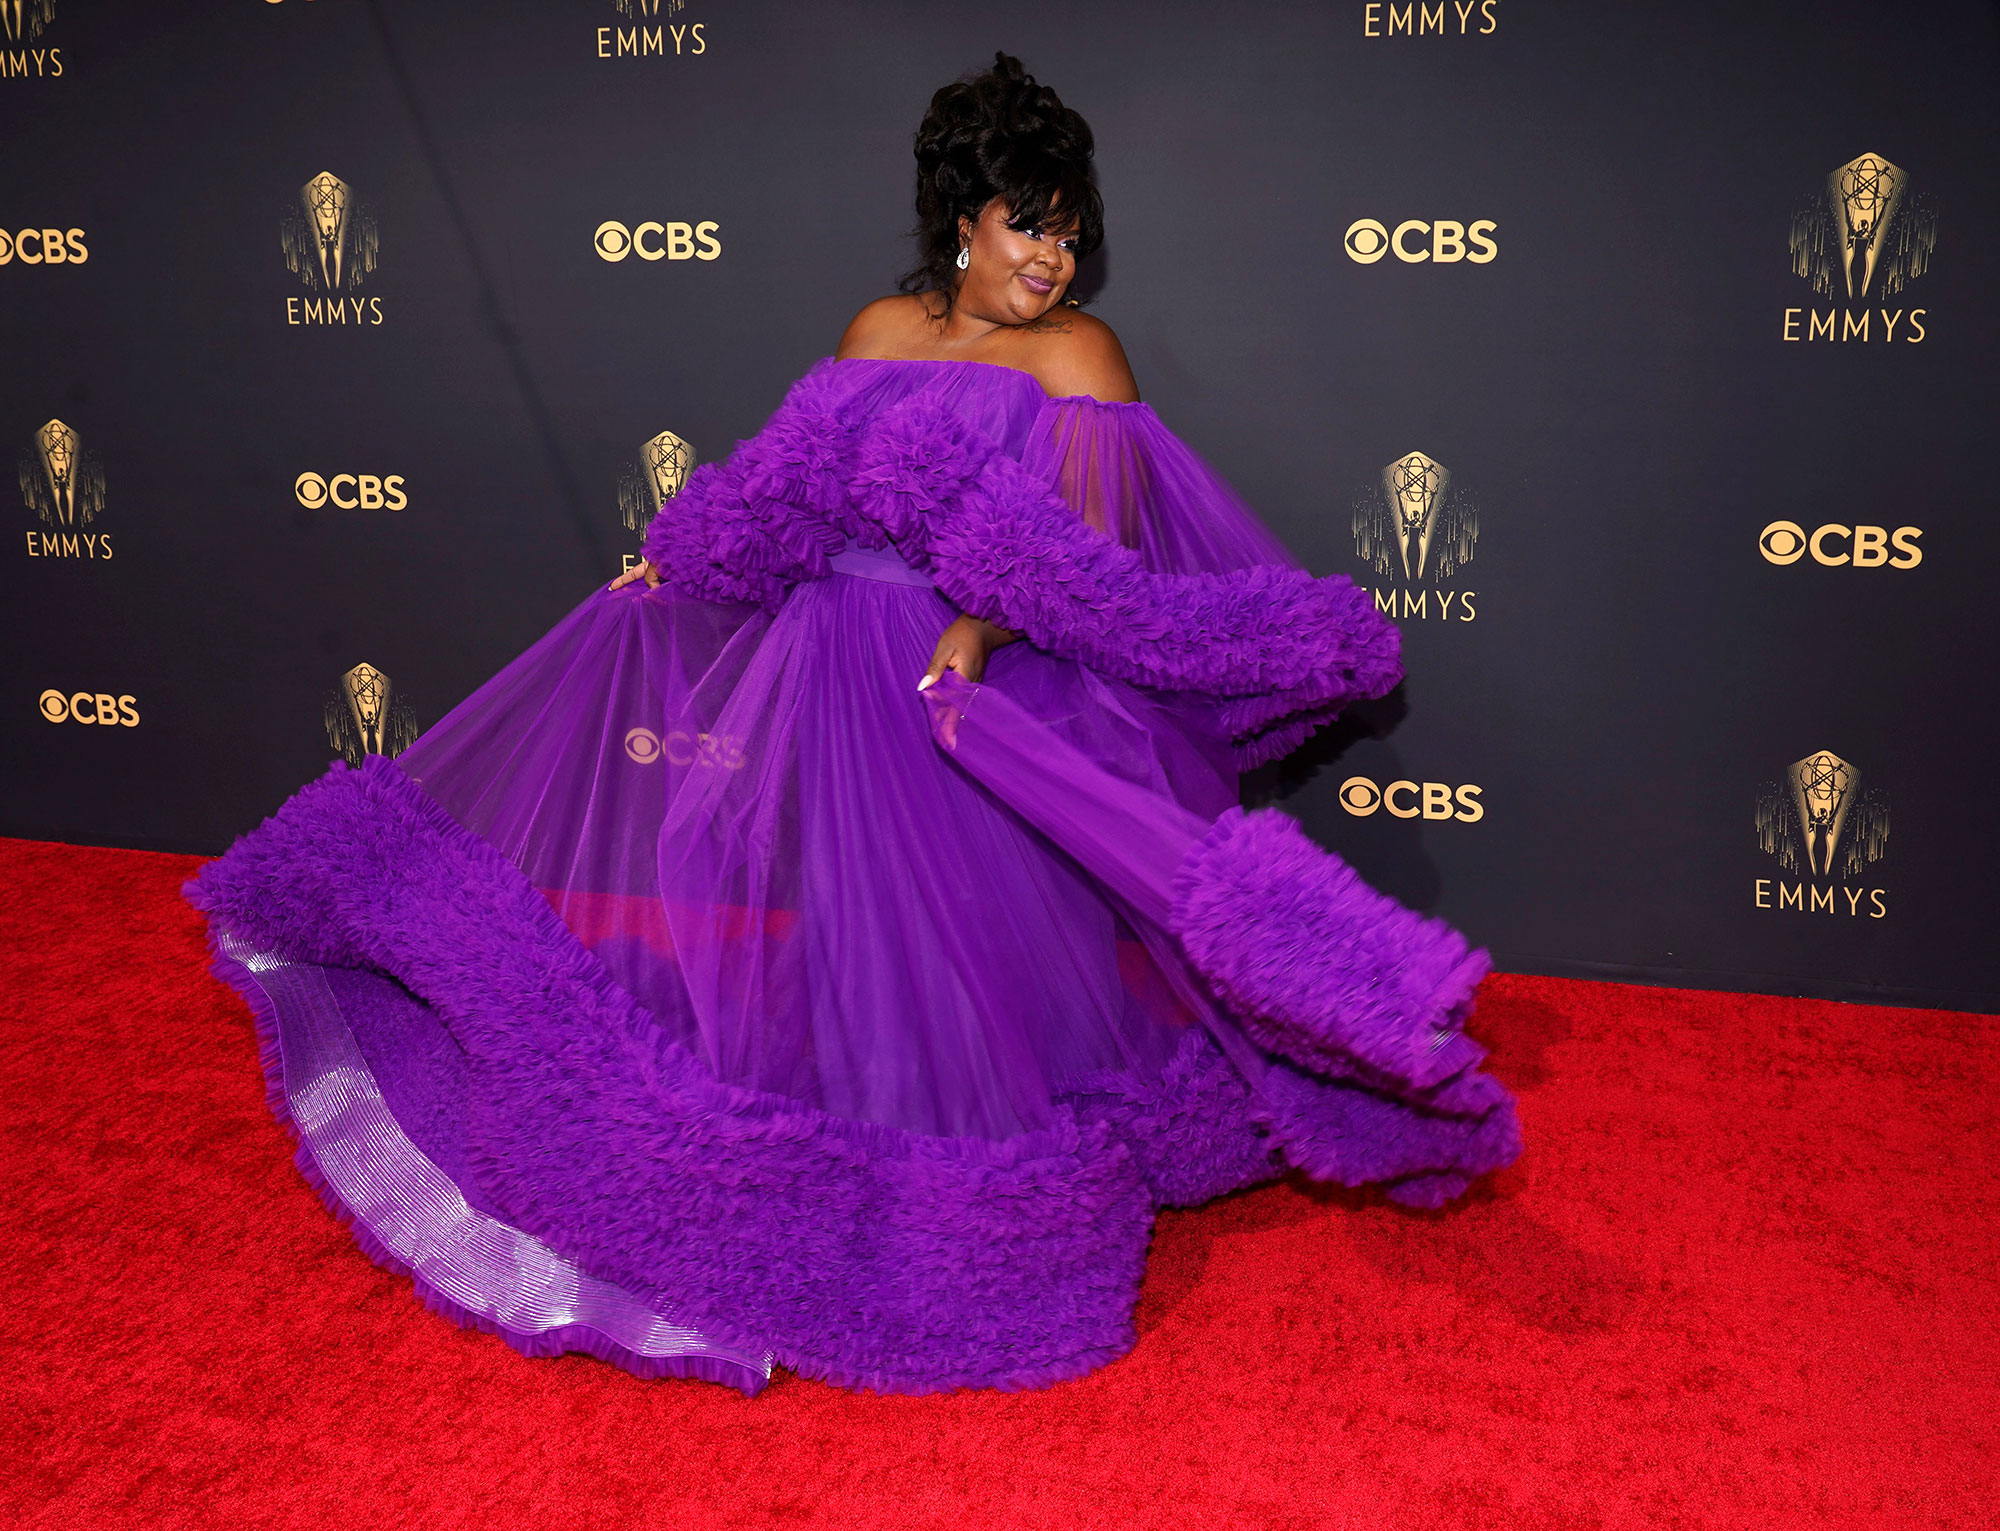 Emmys 2021: Red Carpet Fashion, Dresses